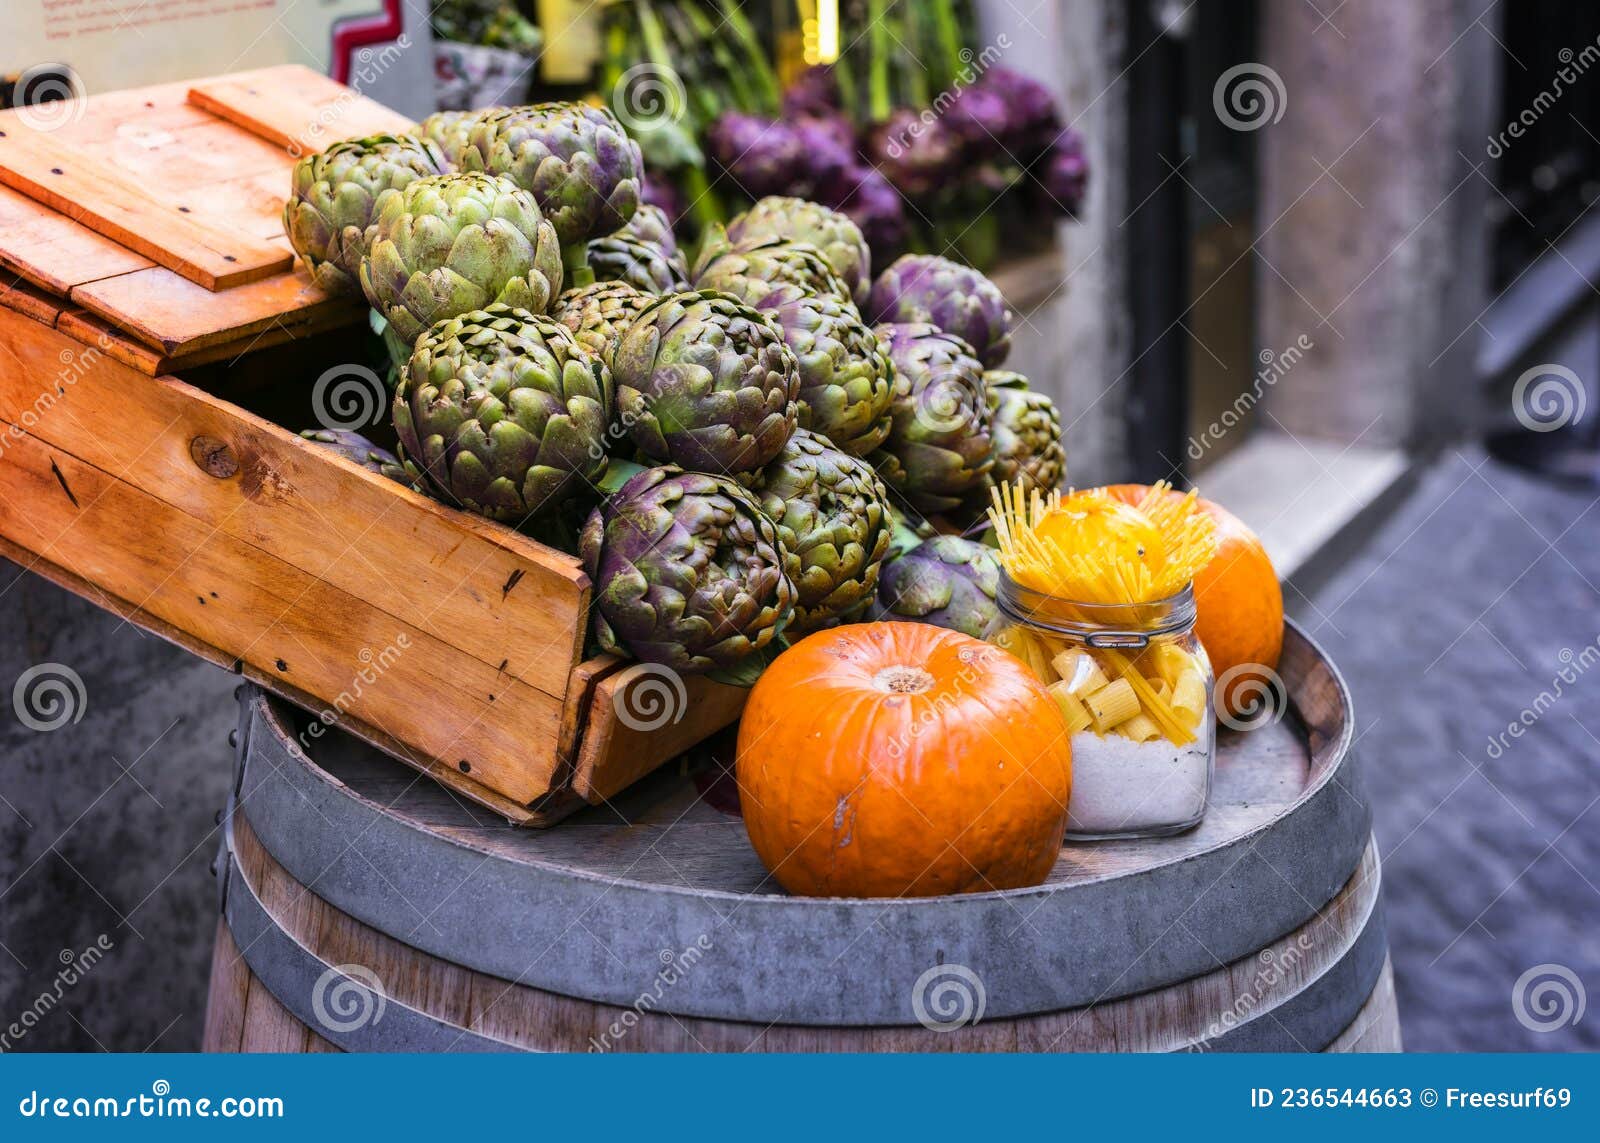 rome street restaurant decoration with seasonal vegetables